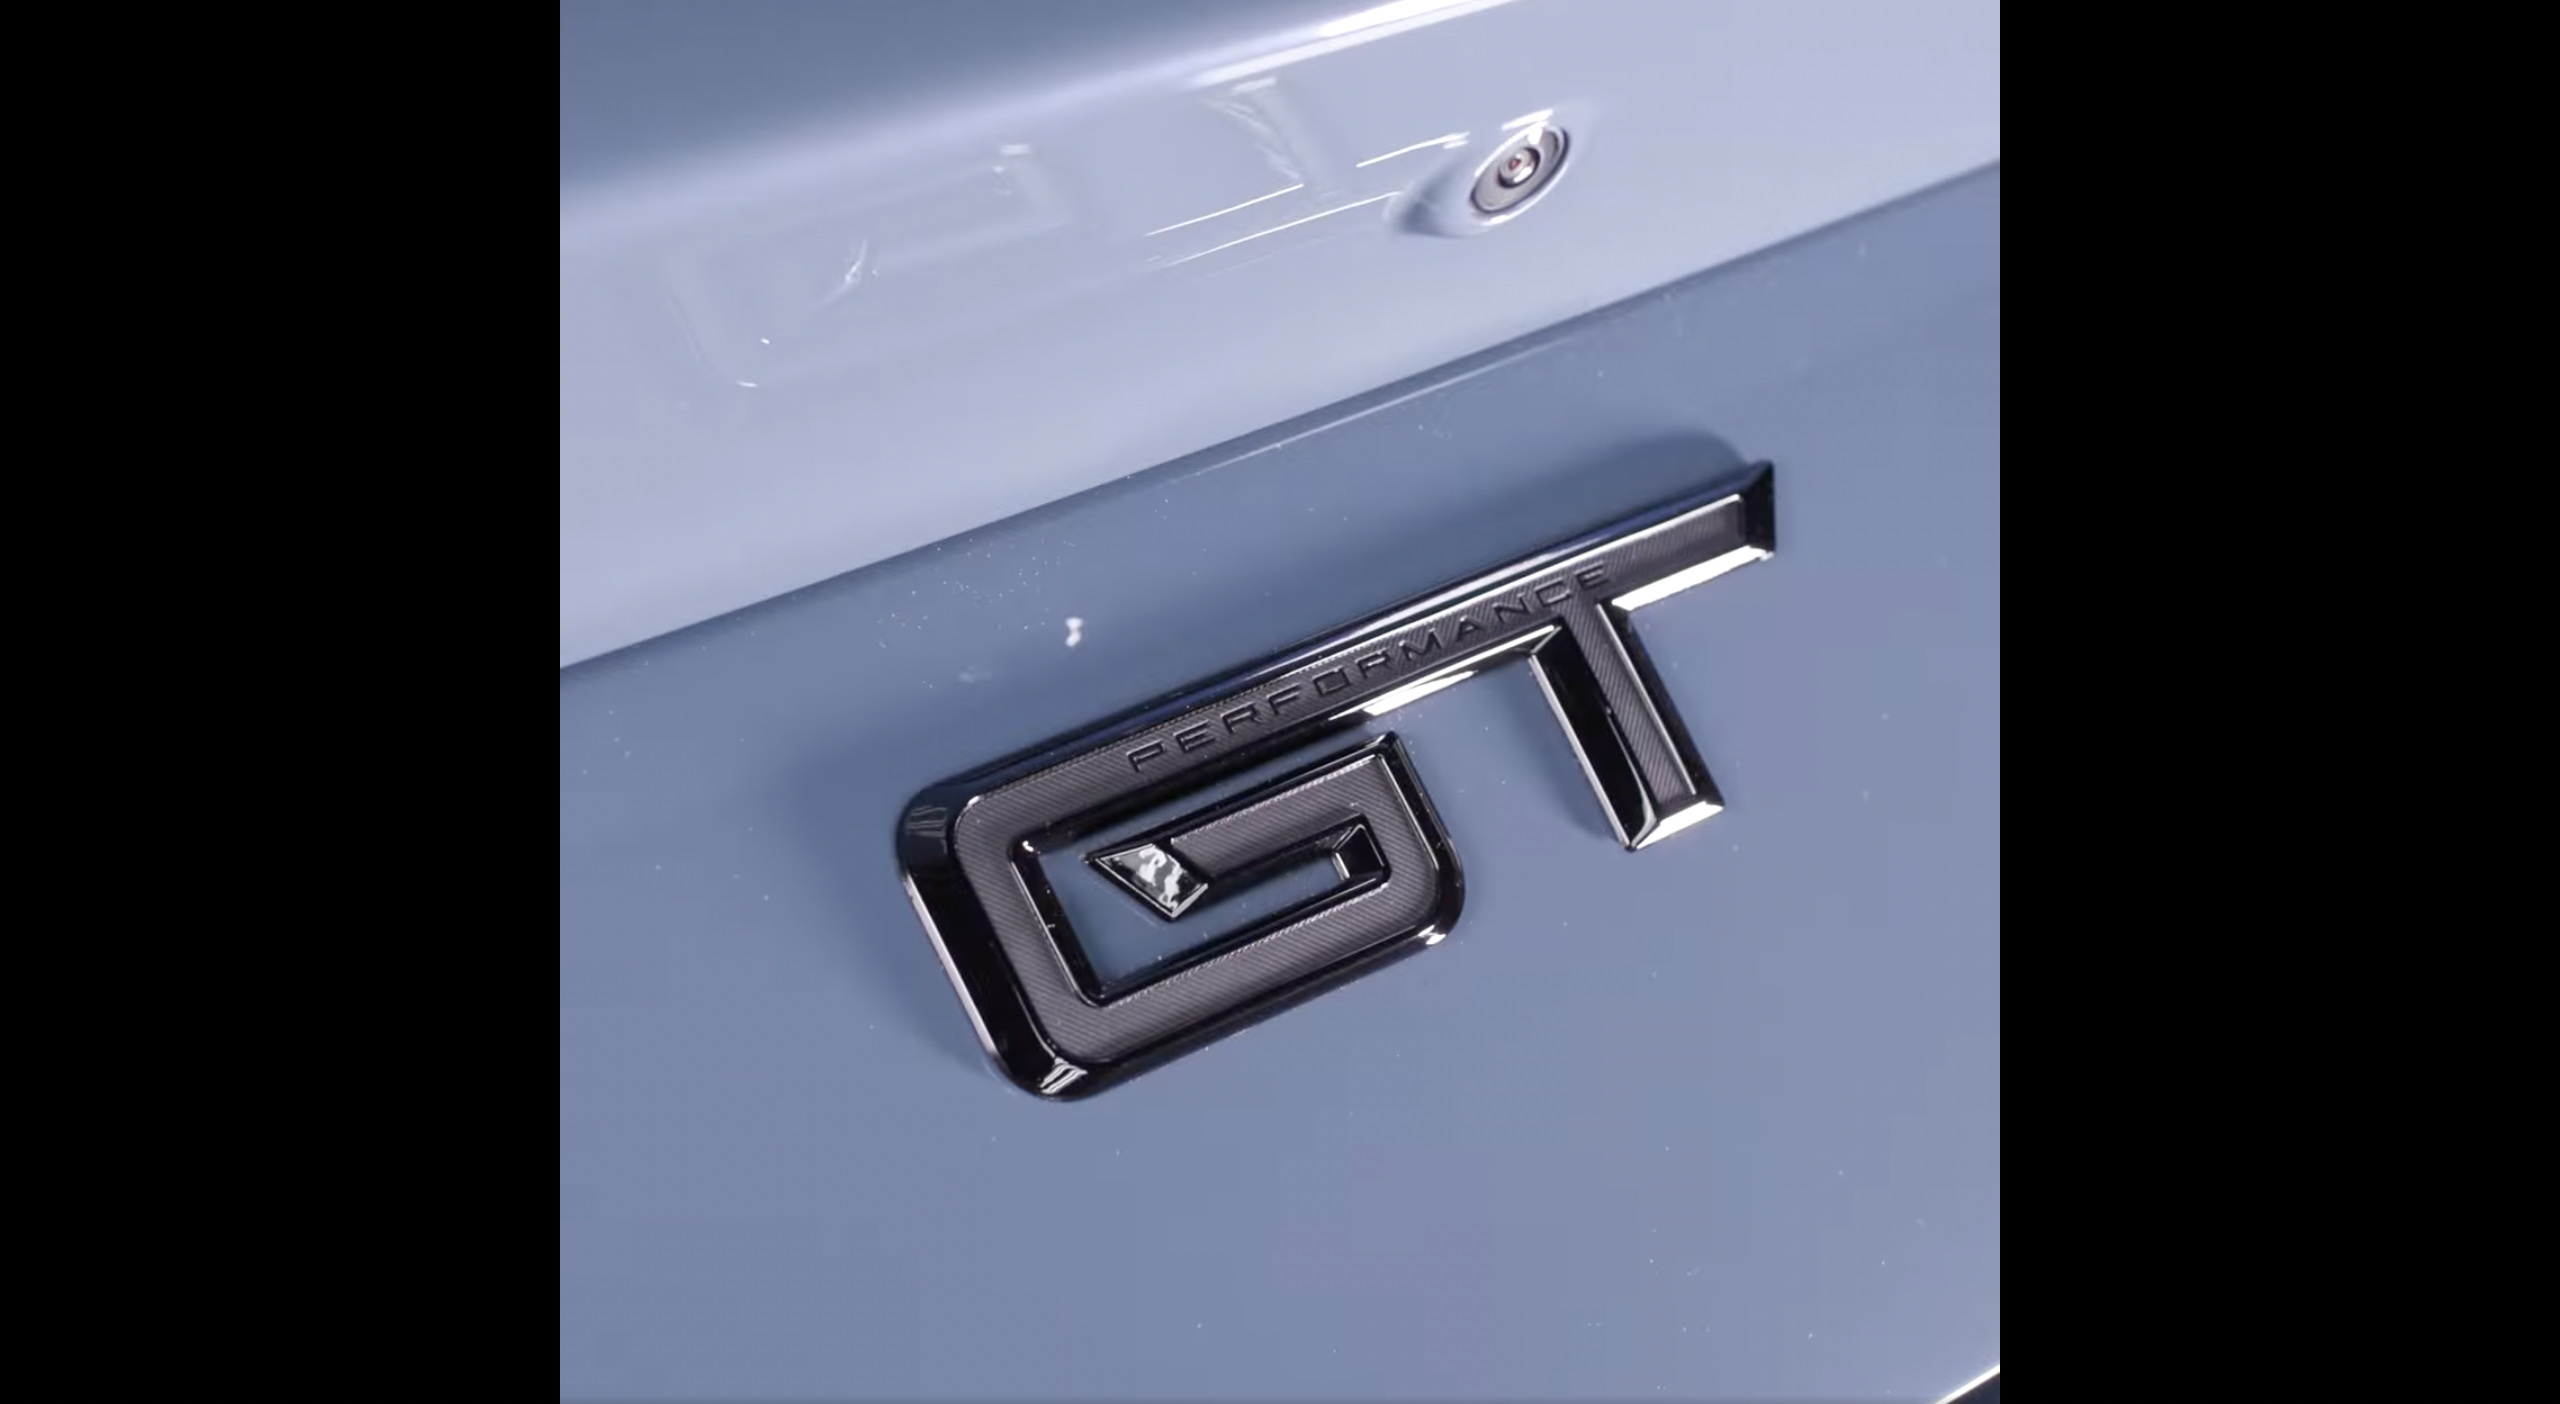 Sakuun GT Car Badge 3D Logo Metal Emblem Automotive Sticker Decal Flexes to  Cars, Motorcycles, Laptops, Windows, Any Smooth Surface 6 cm X 3.8 cm Red &  Black : Amazon.in: Car & Motorbike